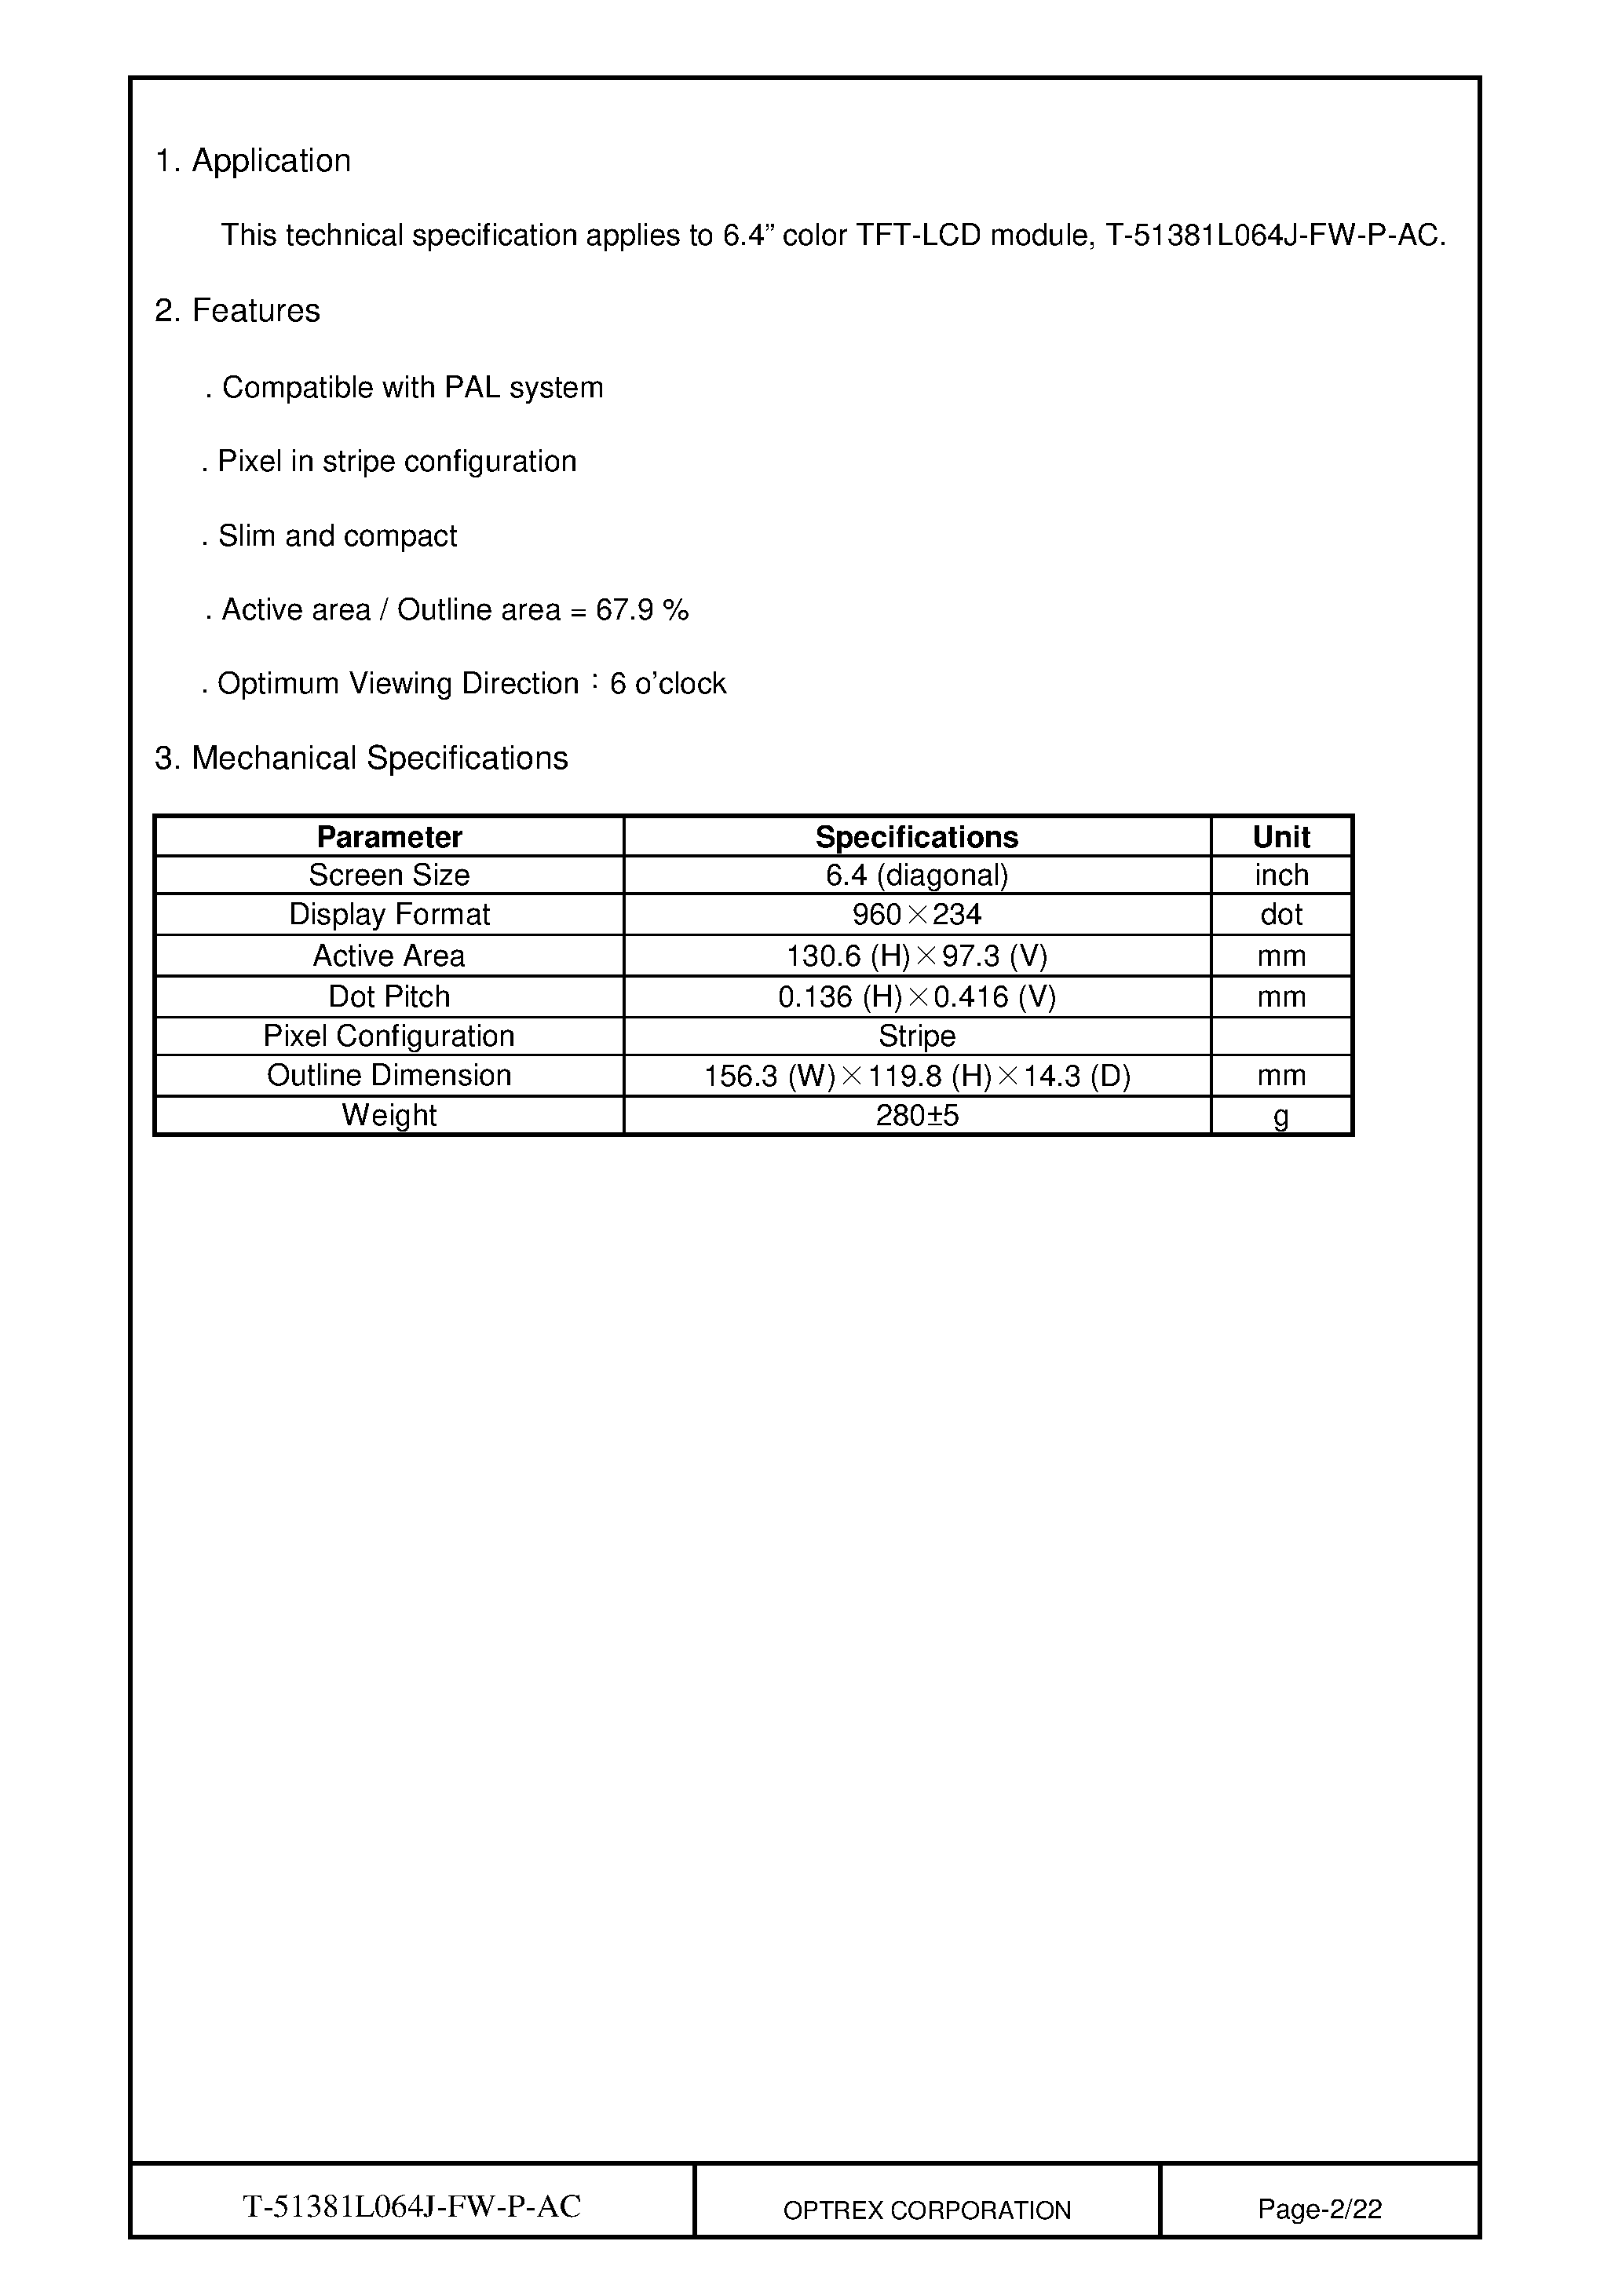 Datasheet T-51381L064J_FW_P_AC - TFT LCD MODULE page 2